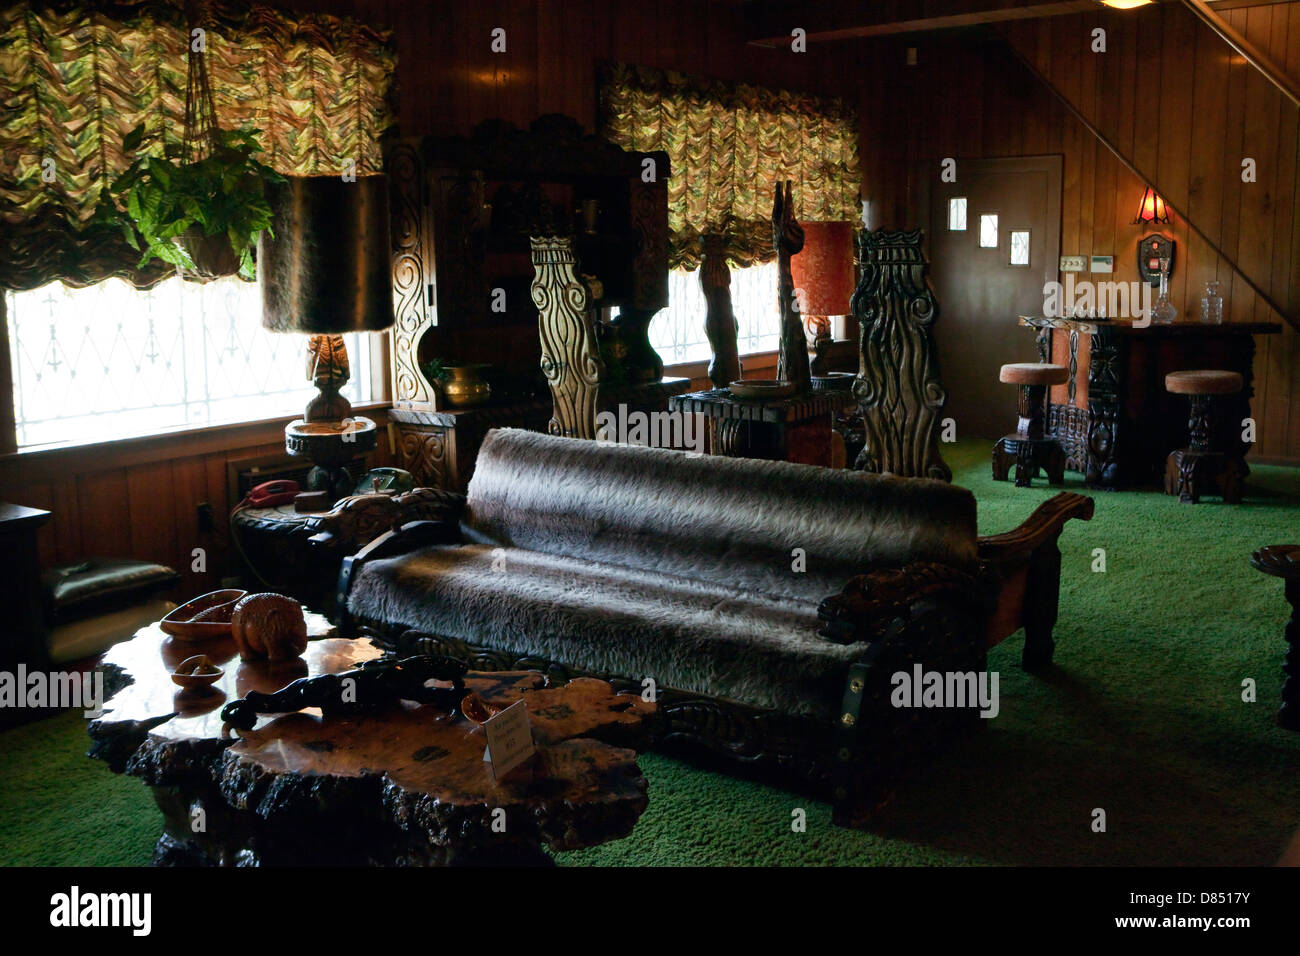 Una vista della giungla in camera Elvis Presley's Mansion Graceland, in Memphis, Tennessee Foto Stock